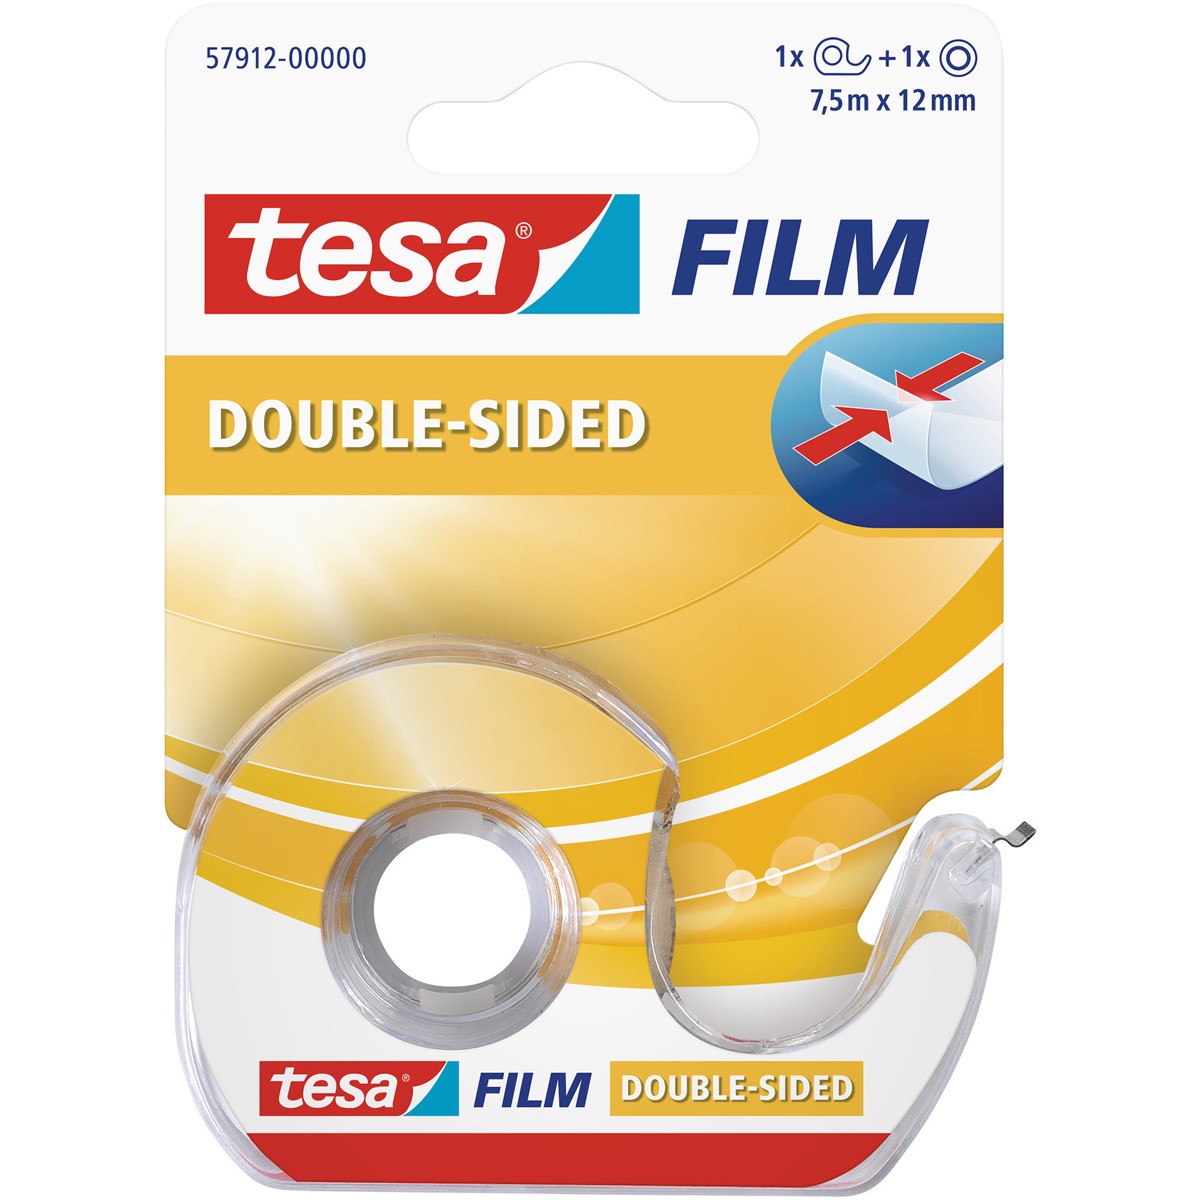 tesa 57912-00000 - tesafilm doppelseitig klebend, 7,5 m x 12 mm +